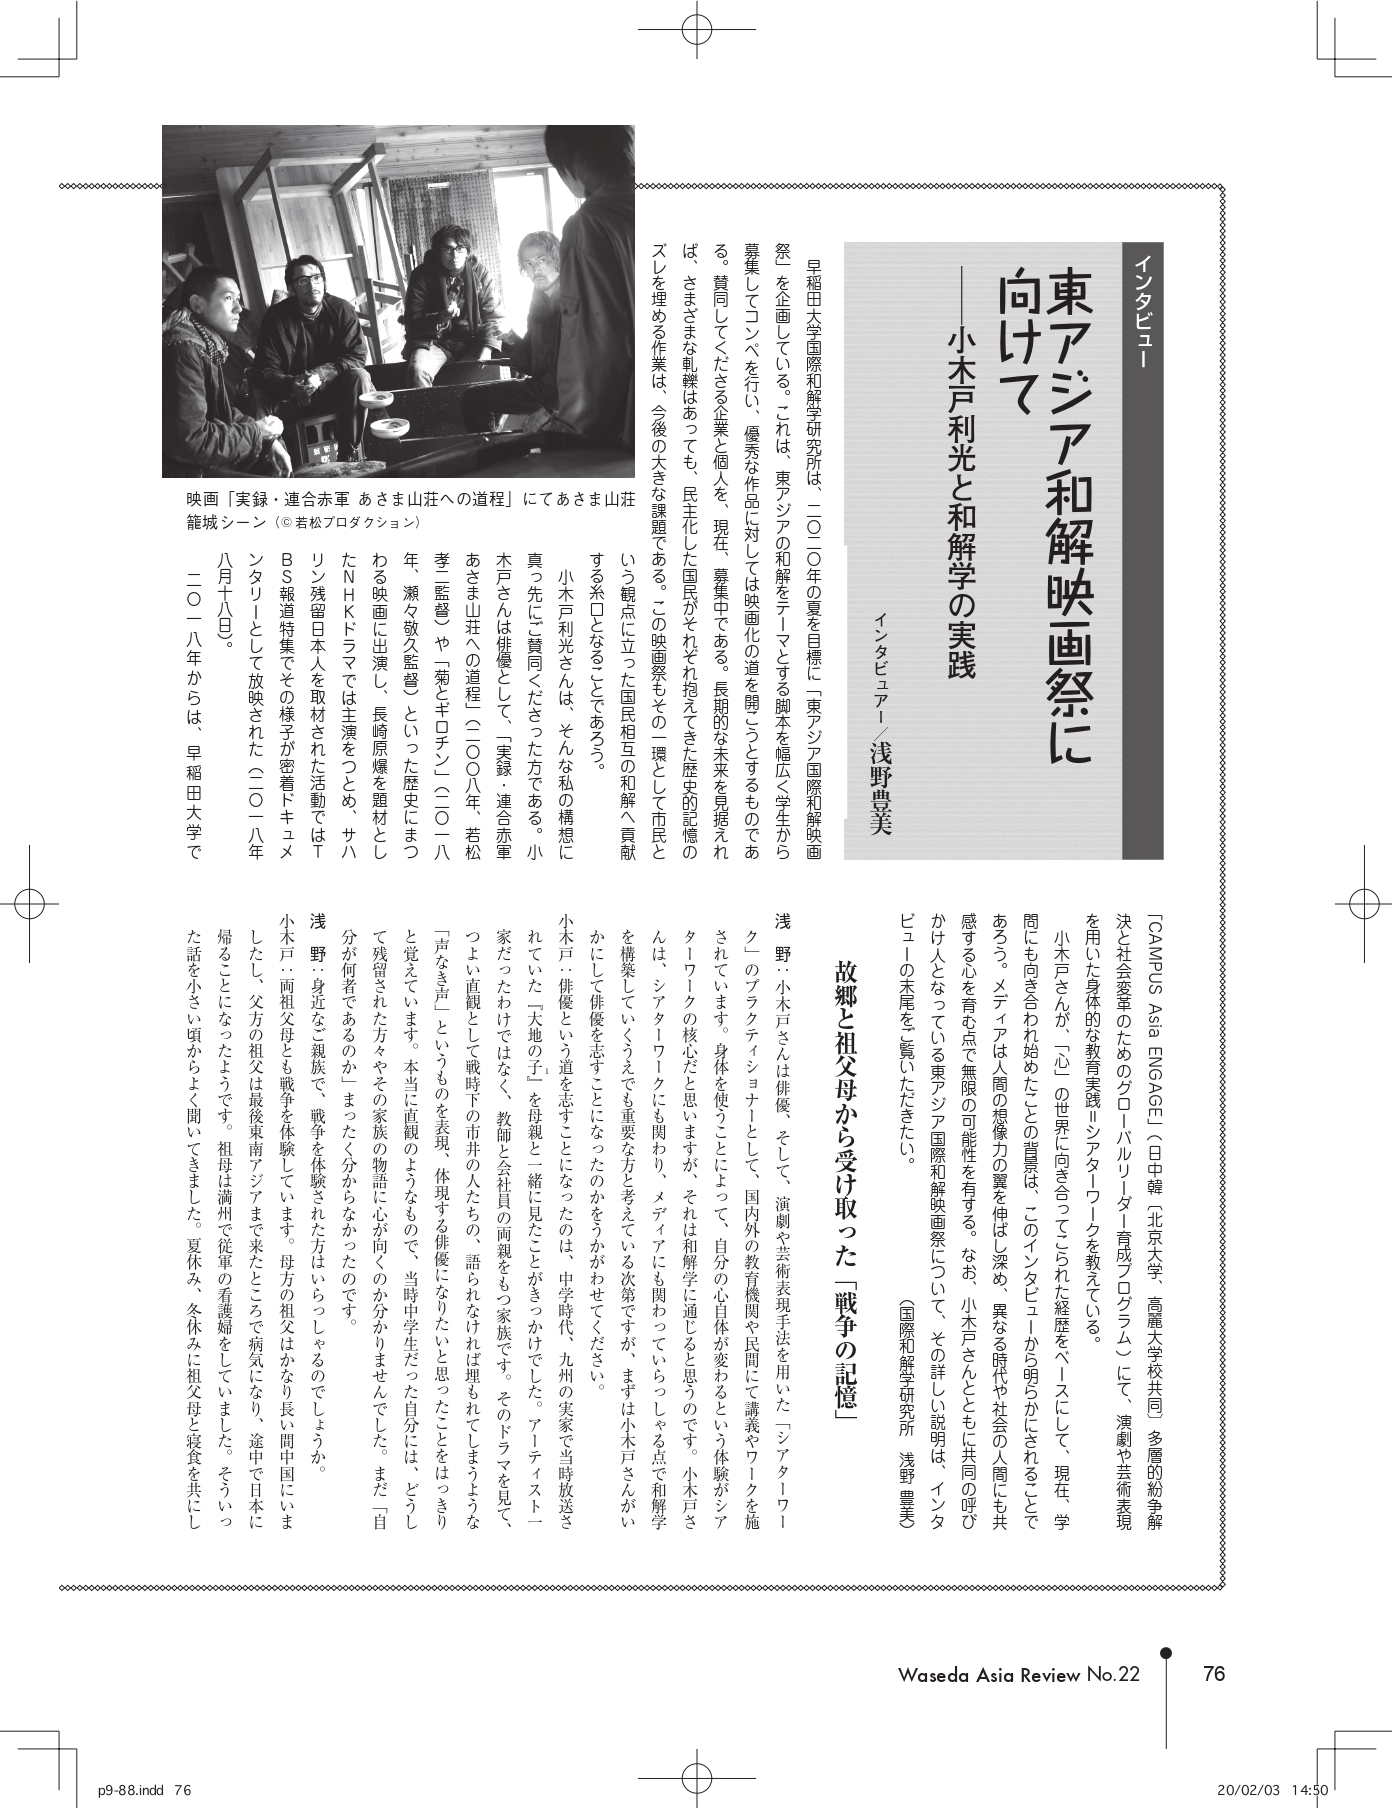 Waseda Asia Review / ワセダアジアレビュー ロングインタビュー ”東アジア和解映画祭に向けて – 小木戸利光と和解学の実践”